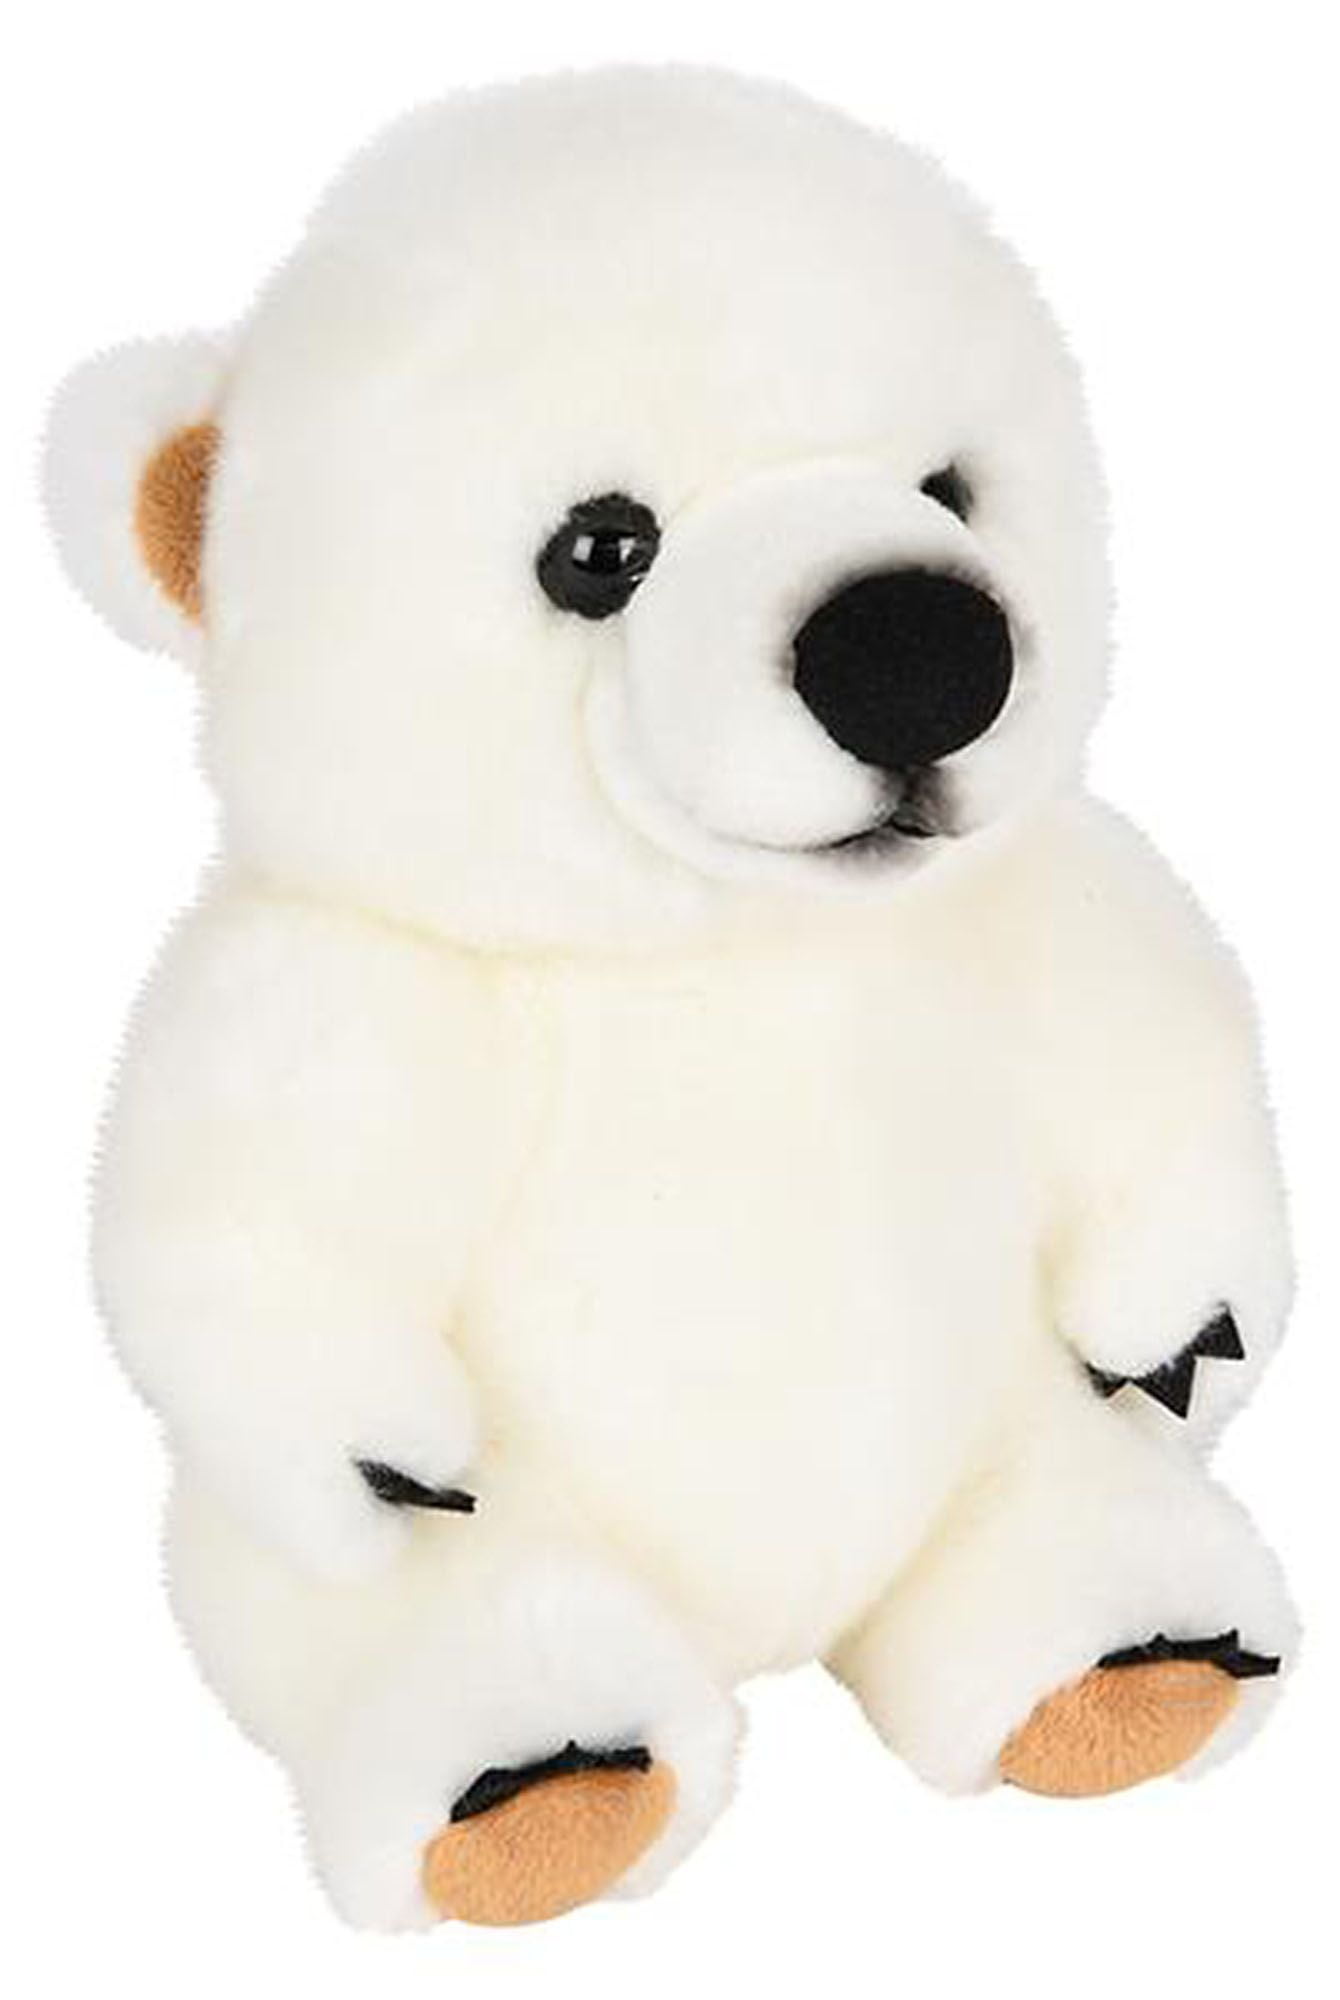 stuffed polar bear walmart